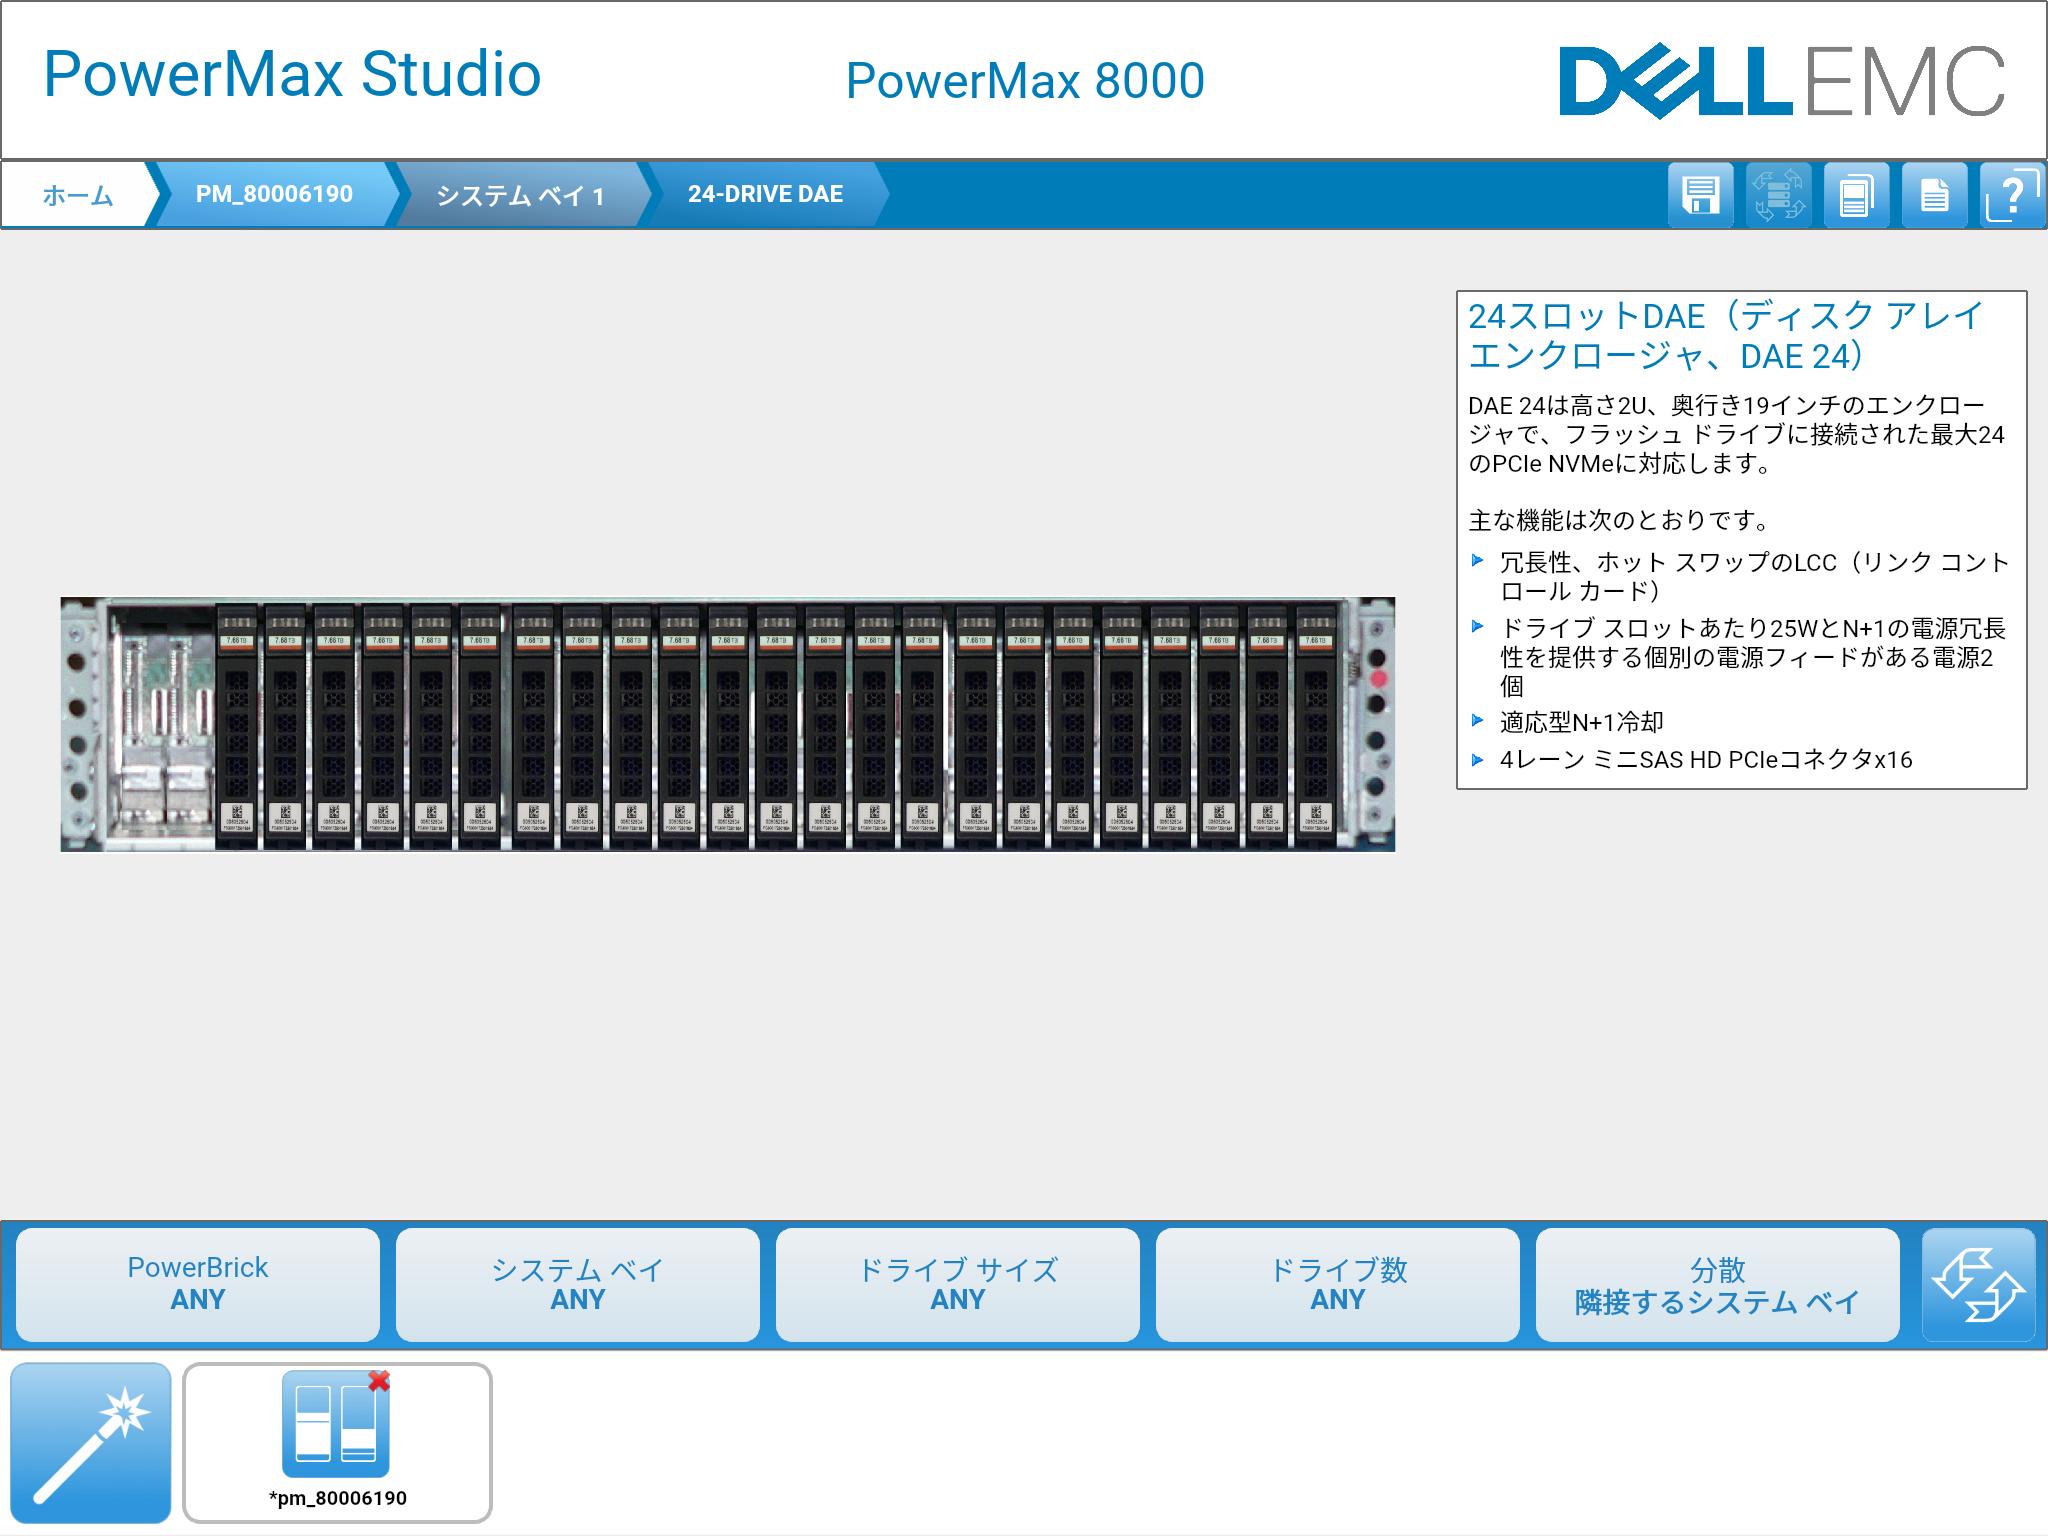 Dell Emc Powermax Studio For Android Apk Download